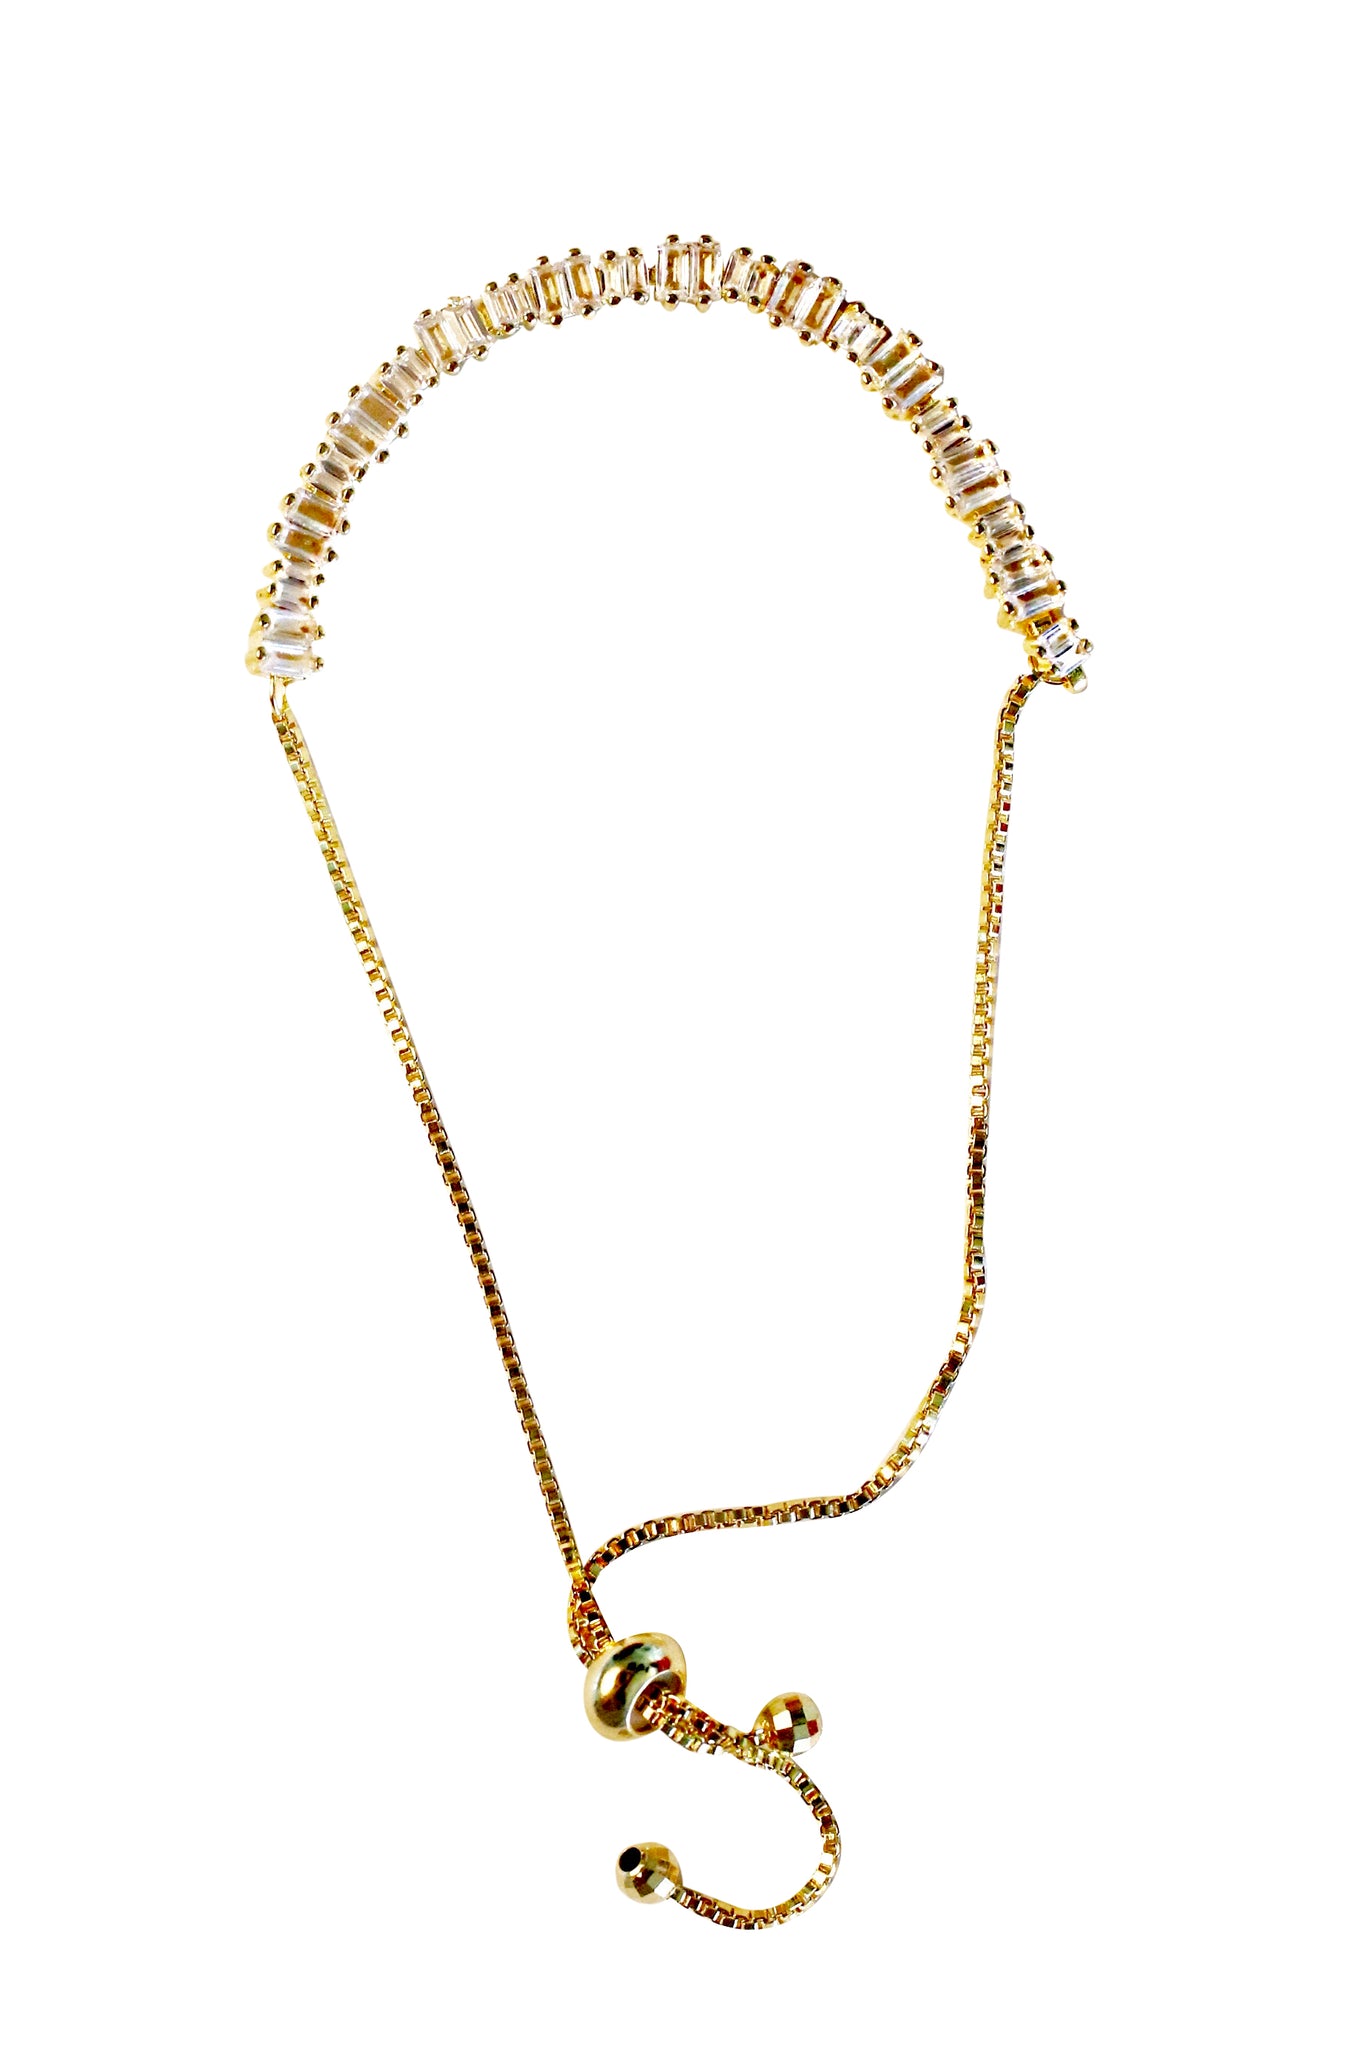 KASH - 18K Gold Plated Emerald Cut Crystal Chain Bracelet